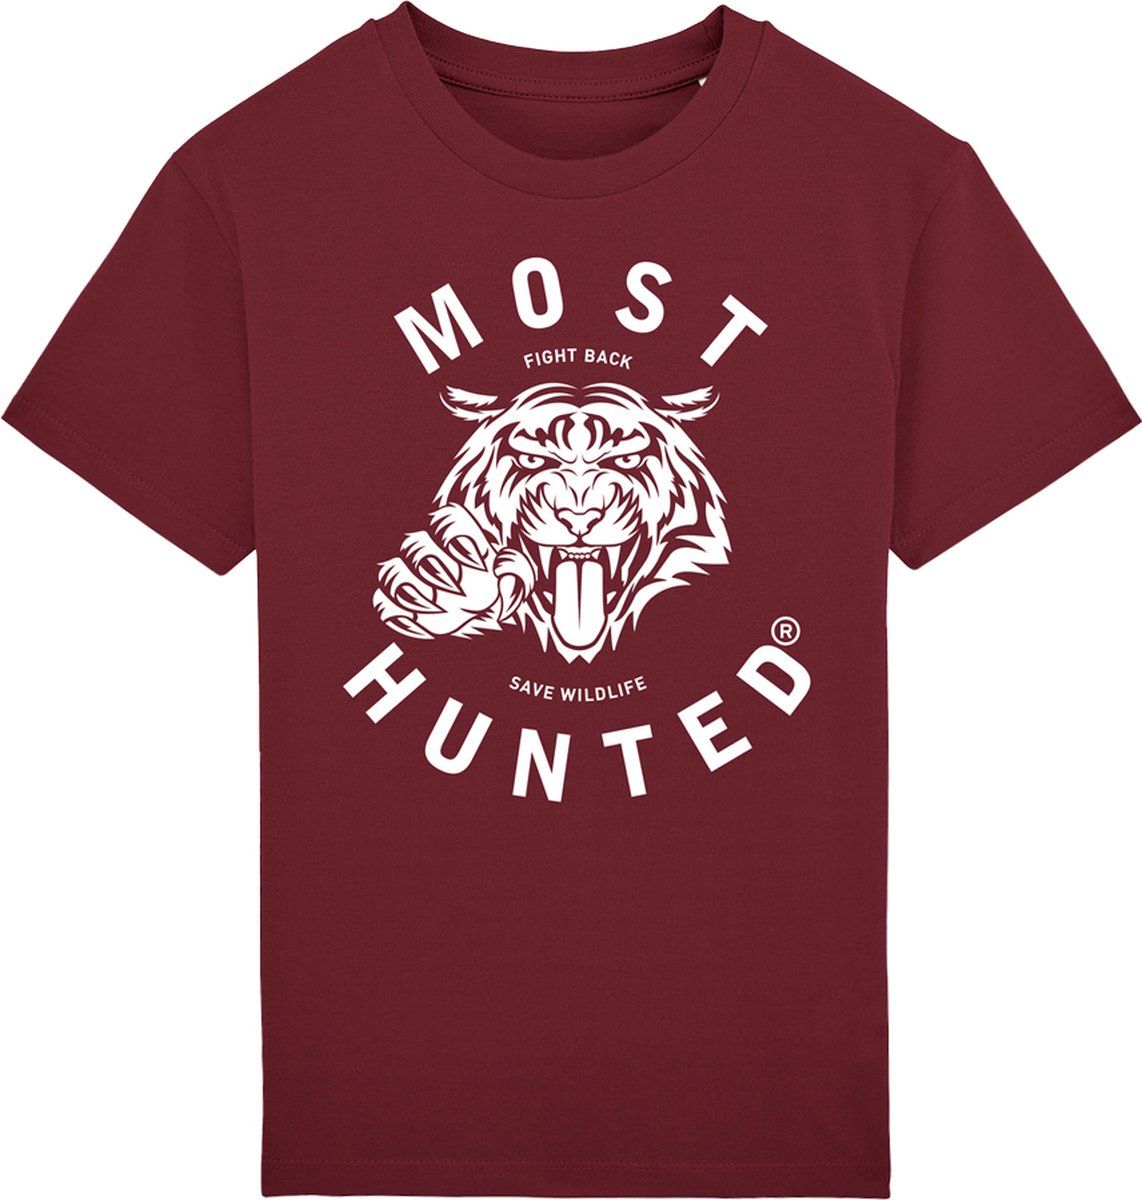 Most Hunted - kinder t-shirt - tijger - bordeaux - wit - maat 98/104